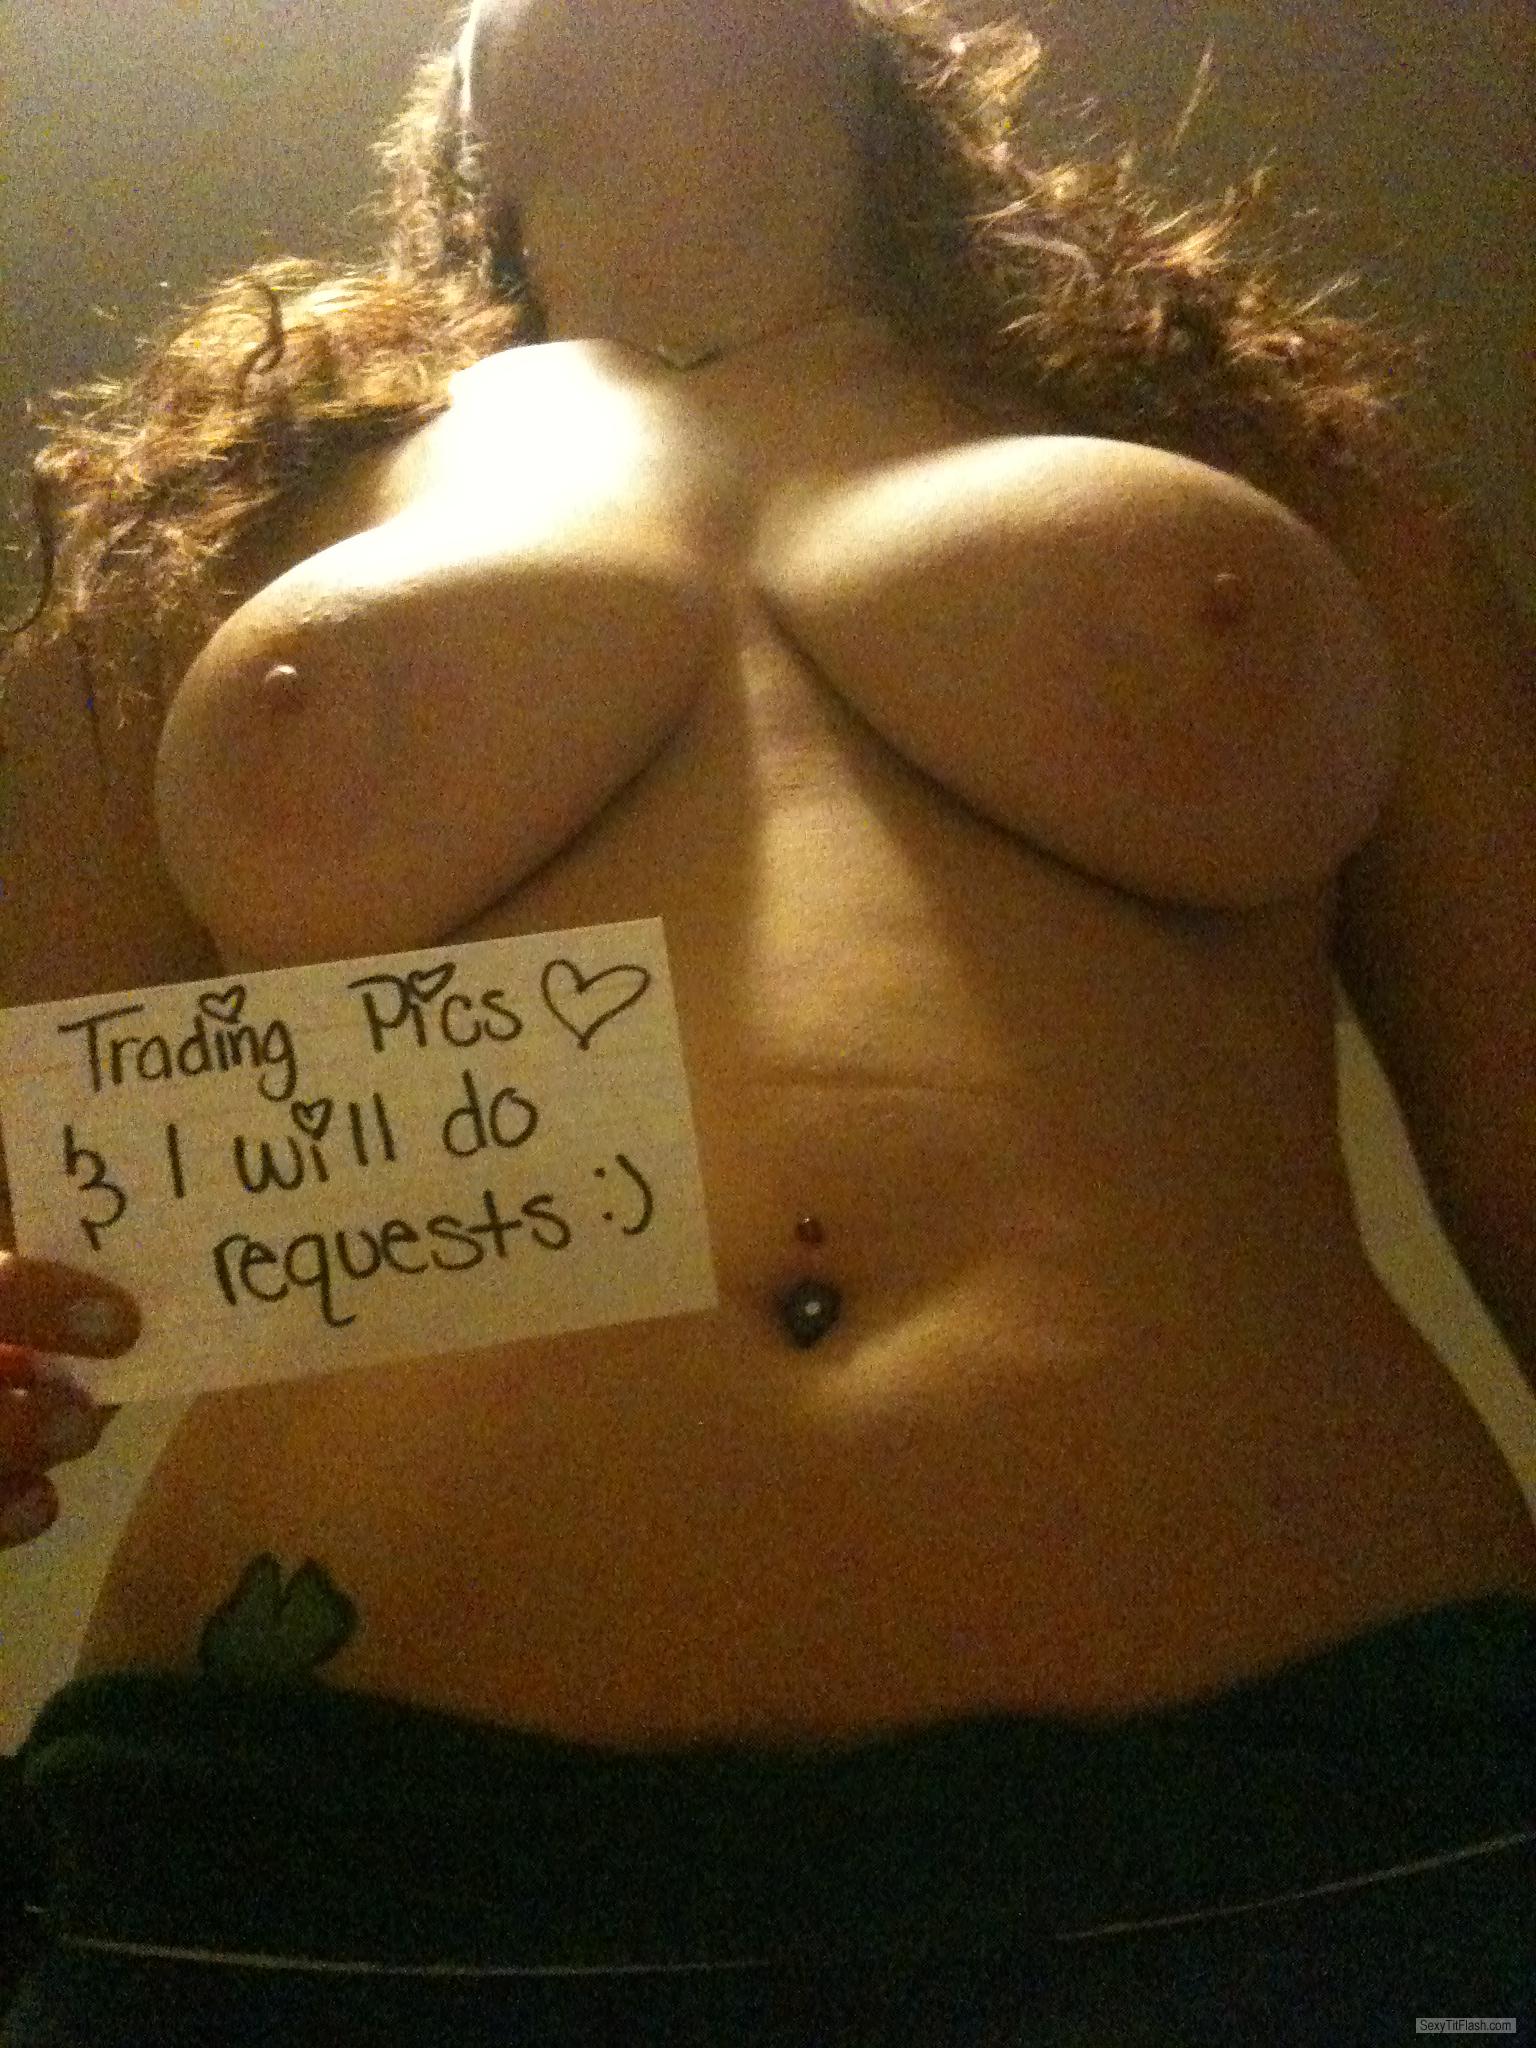 Tit Flash: My Medium Tits - Sparkles from United States